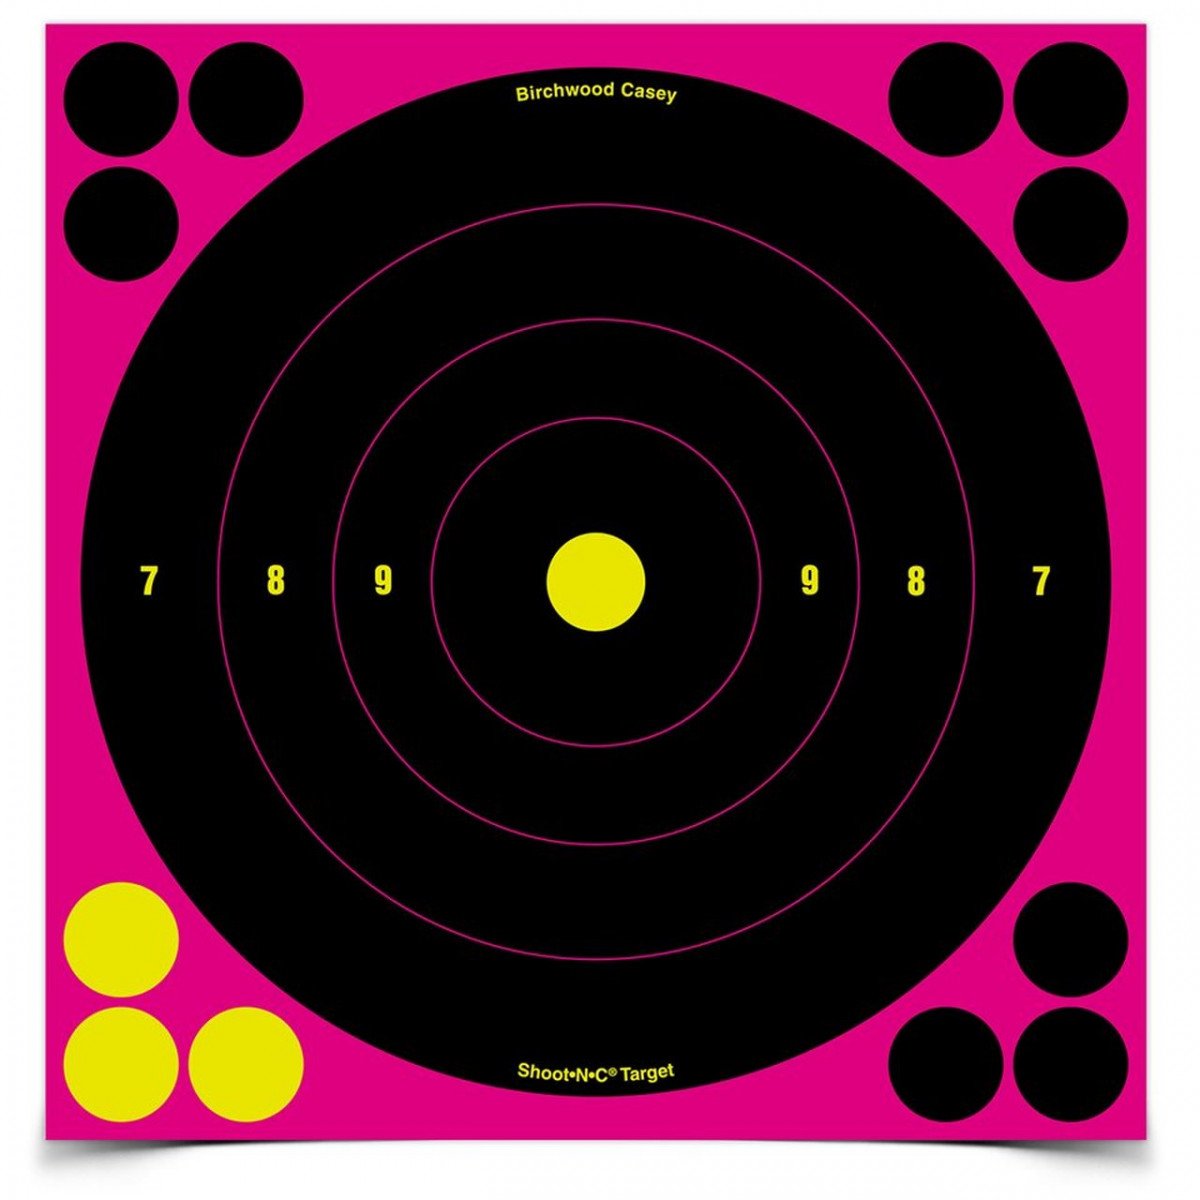 Yellow : Paper : Target